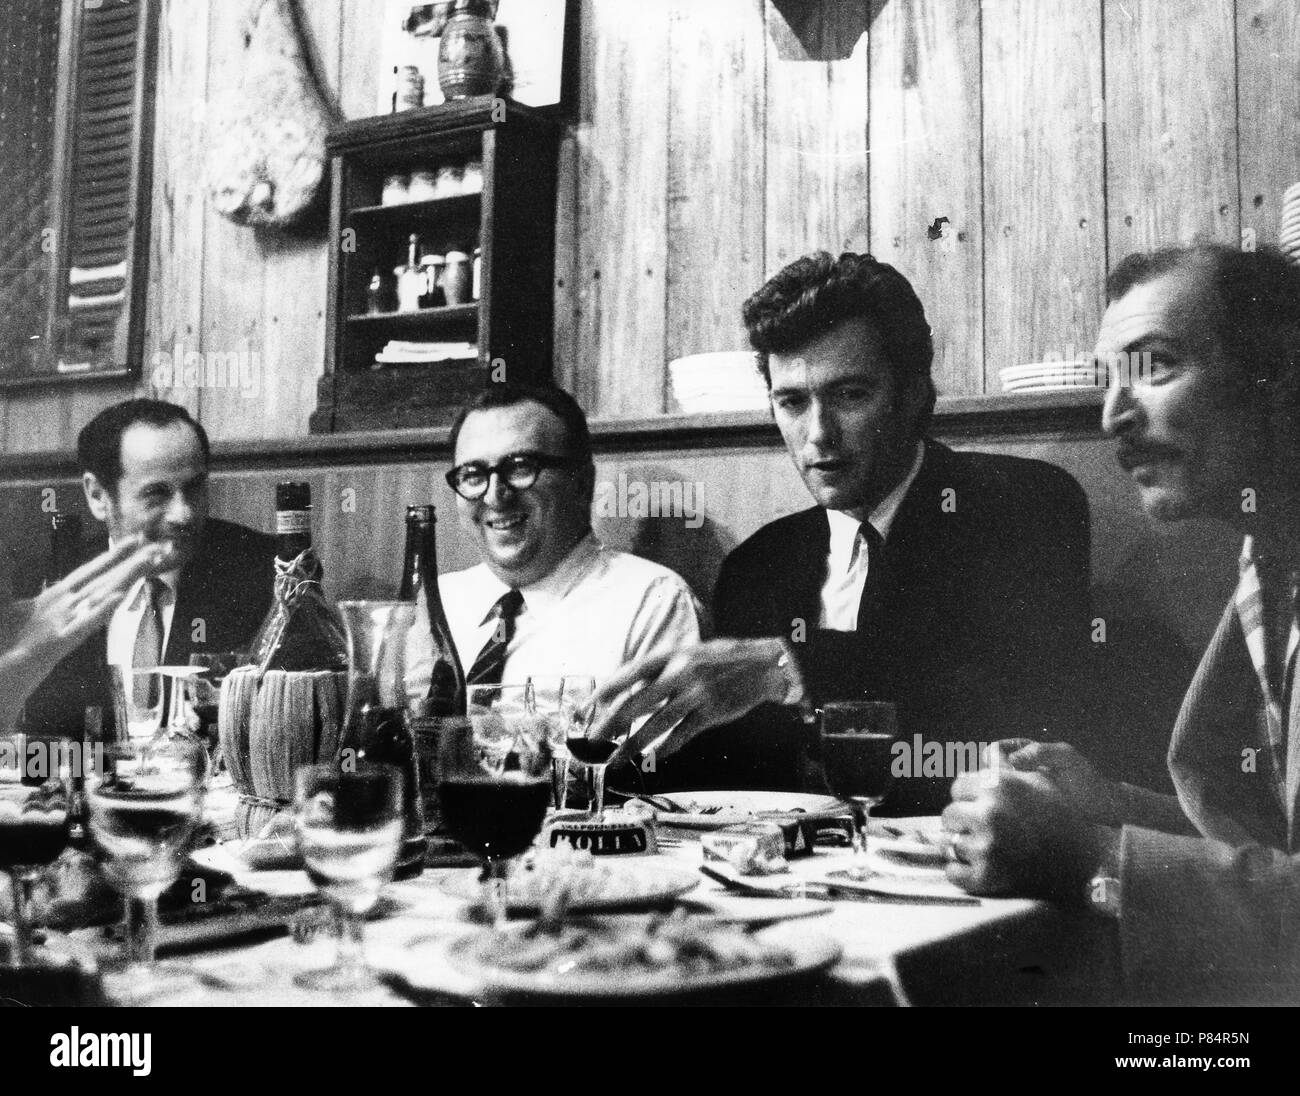 Clint Eastwood, Lee Van Cleef, Sergio Leone, Eli wallach, Roma 1966 Foto de stock